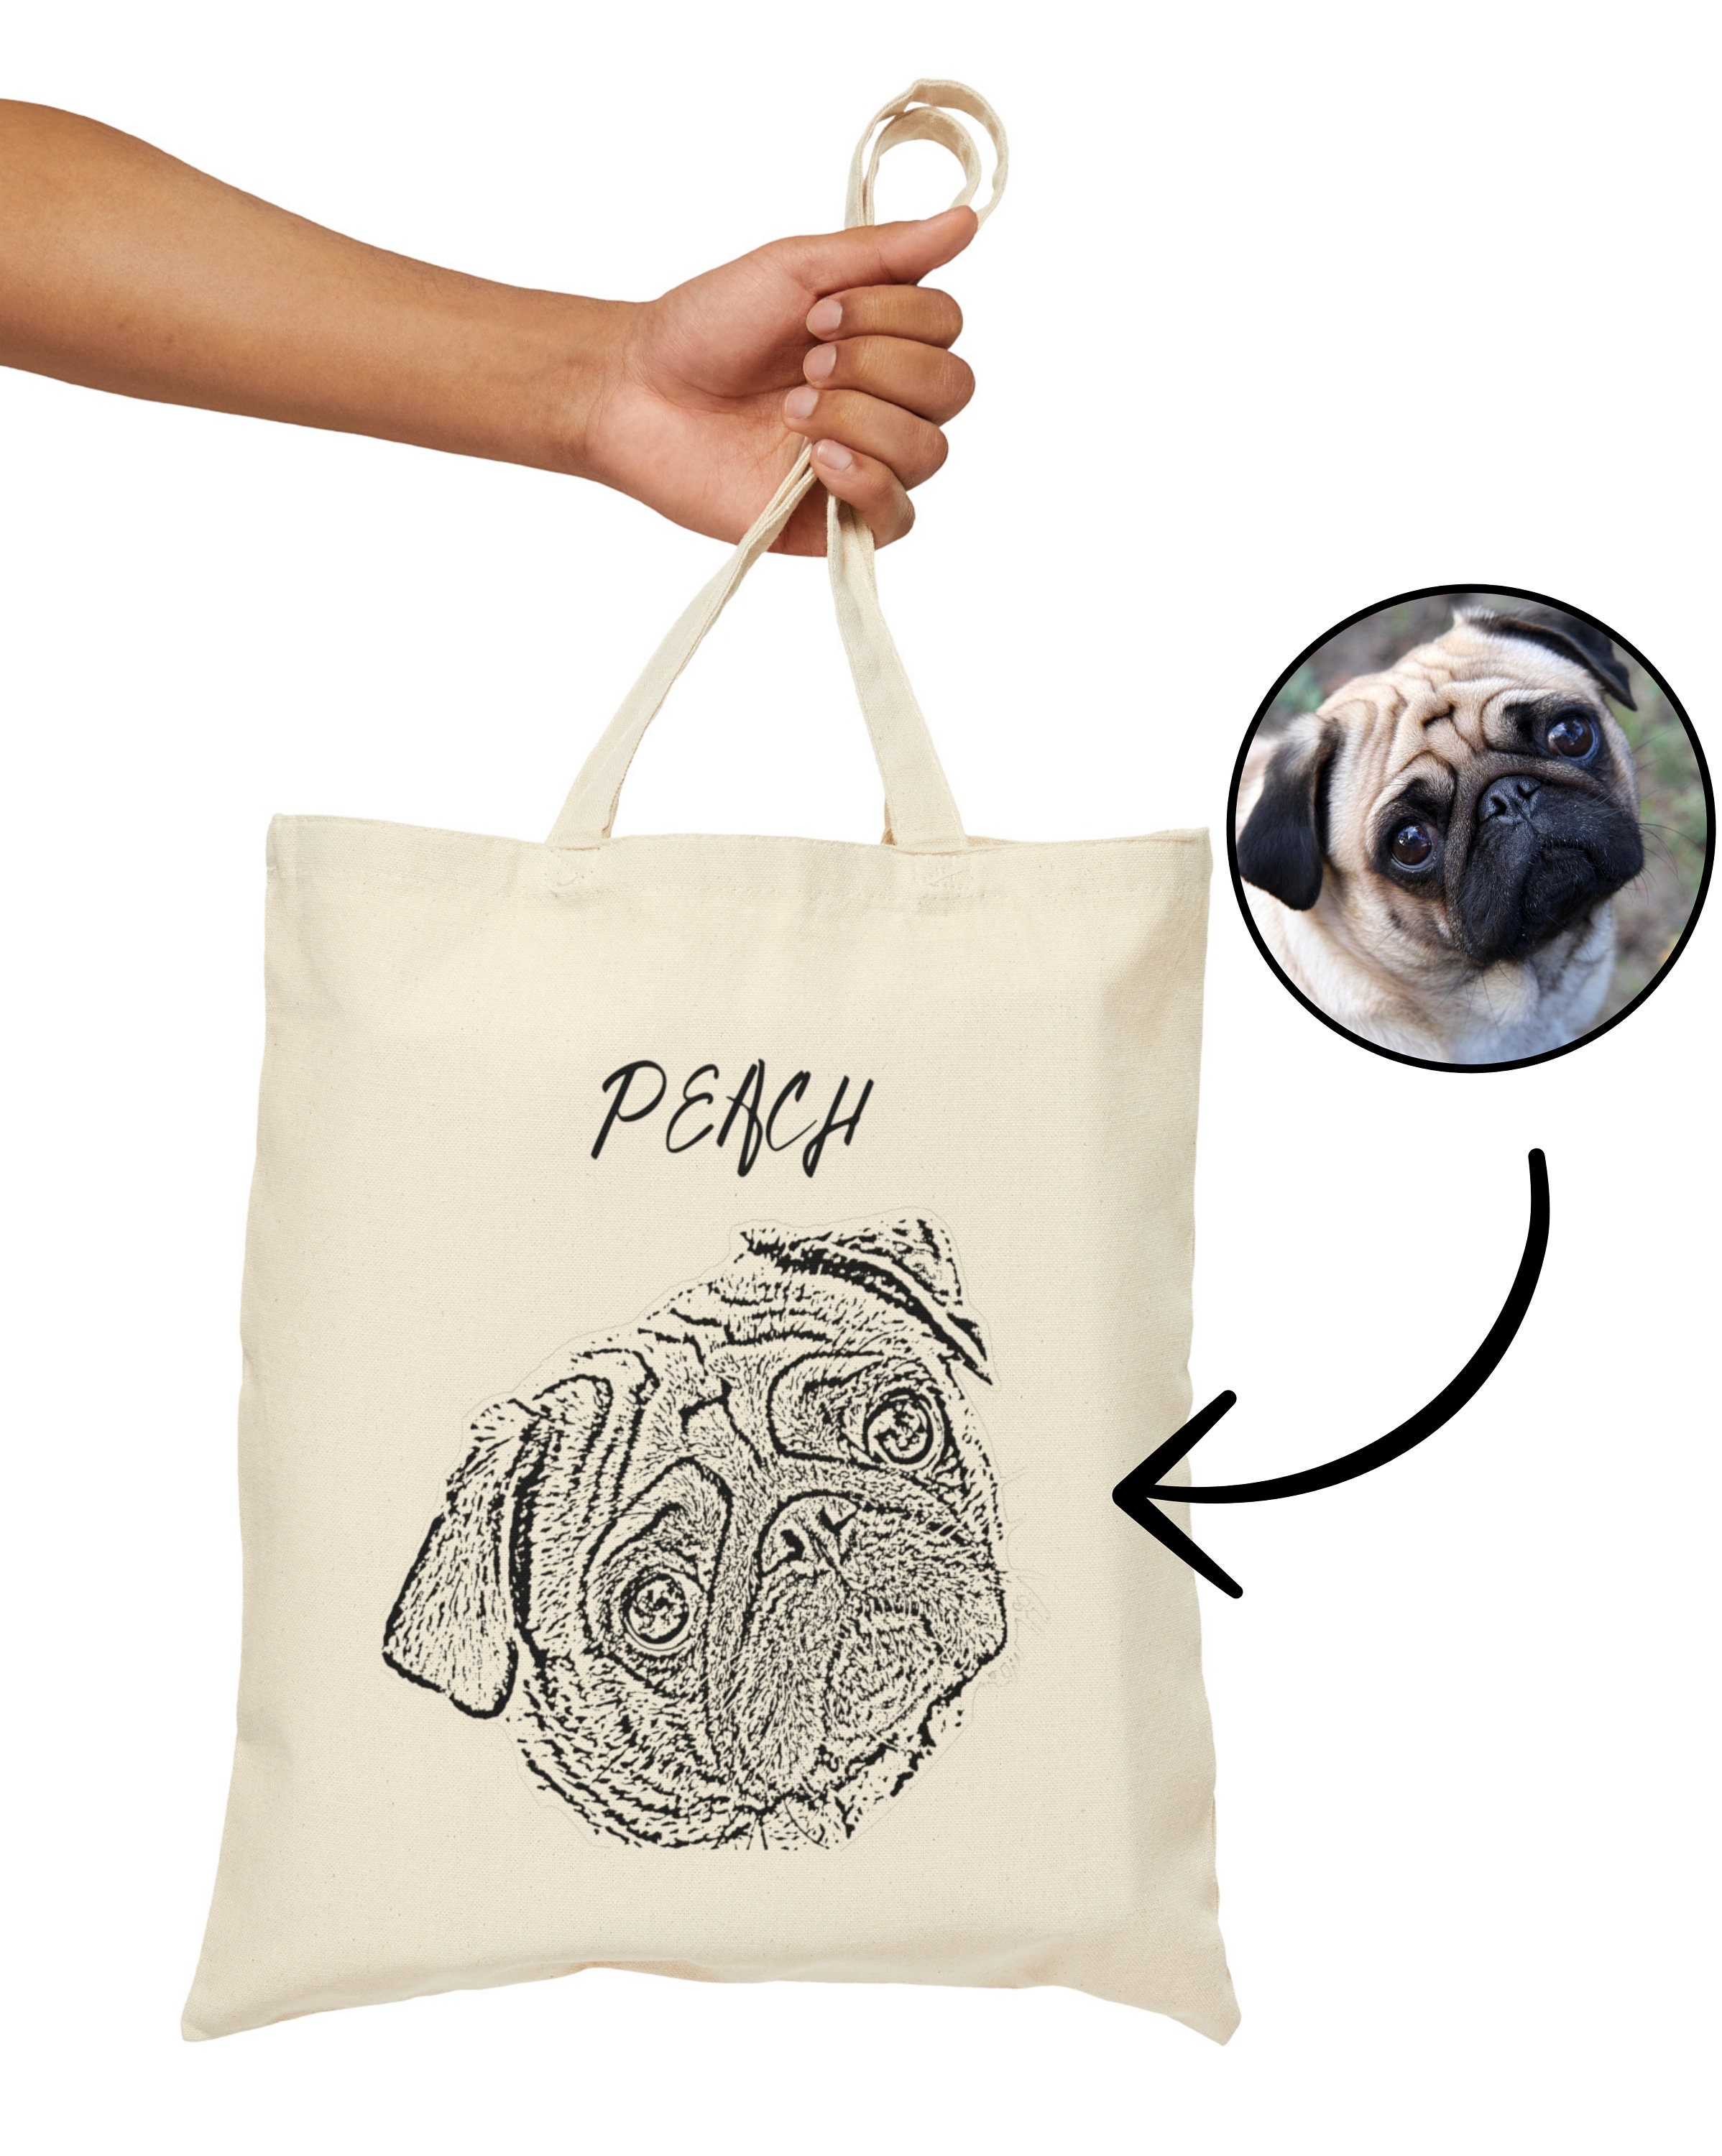 Betop Fashion Dog Carrier PU Leather Dog Handbag Dog Purse Cat Tote Bag Pet Cat Dog Hiking Bag, Brown, Small 38*23*17cm